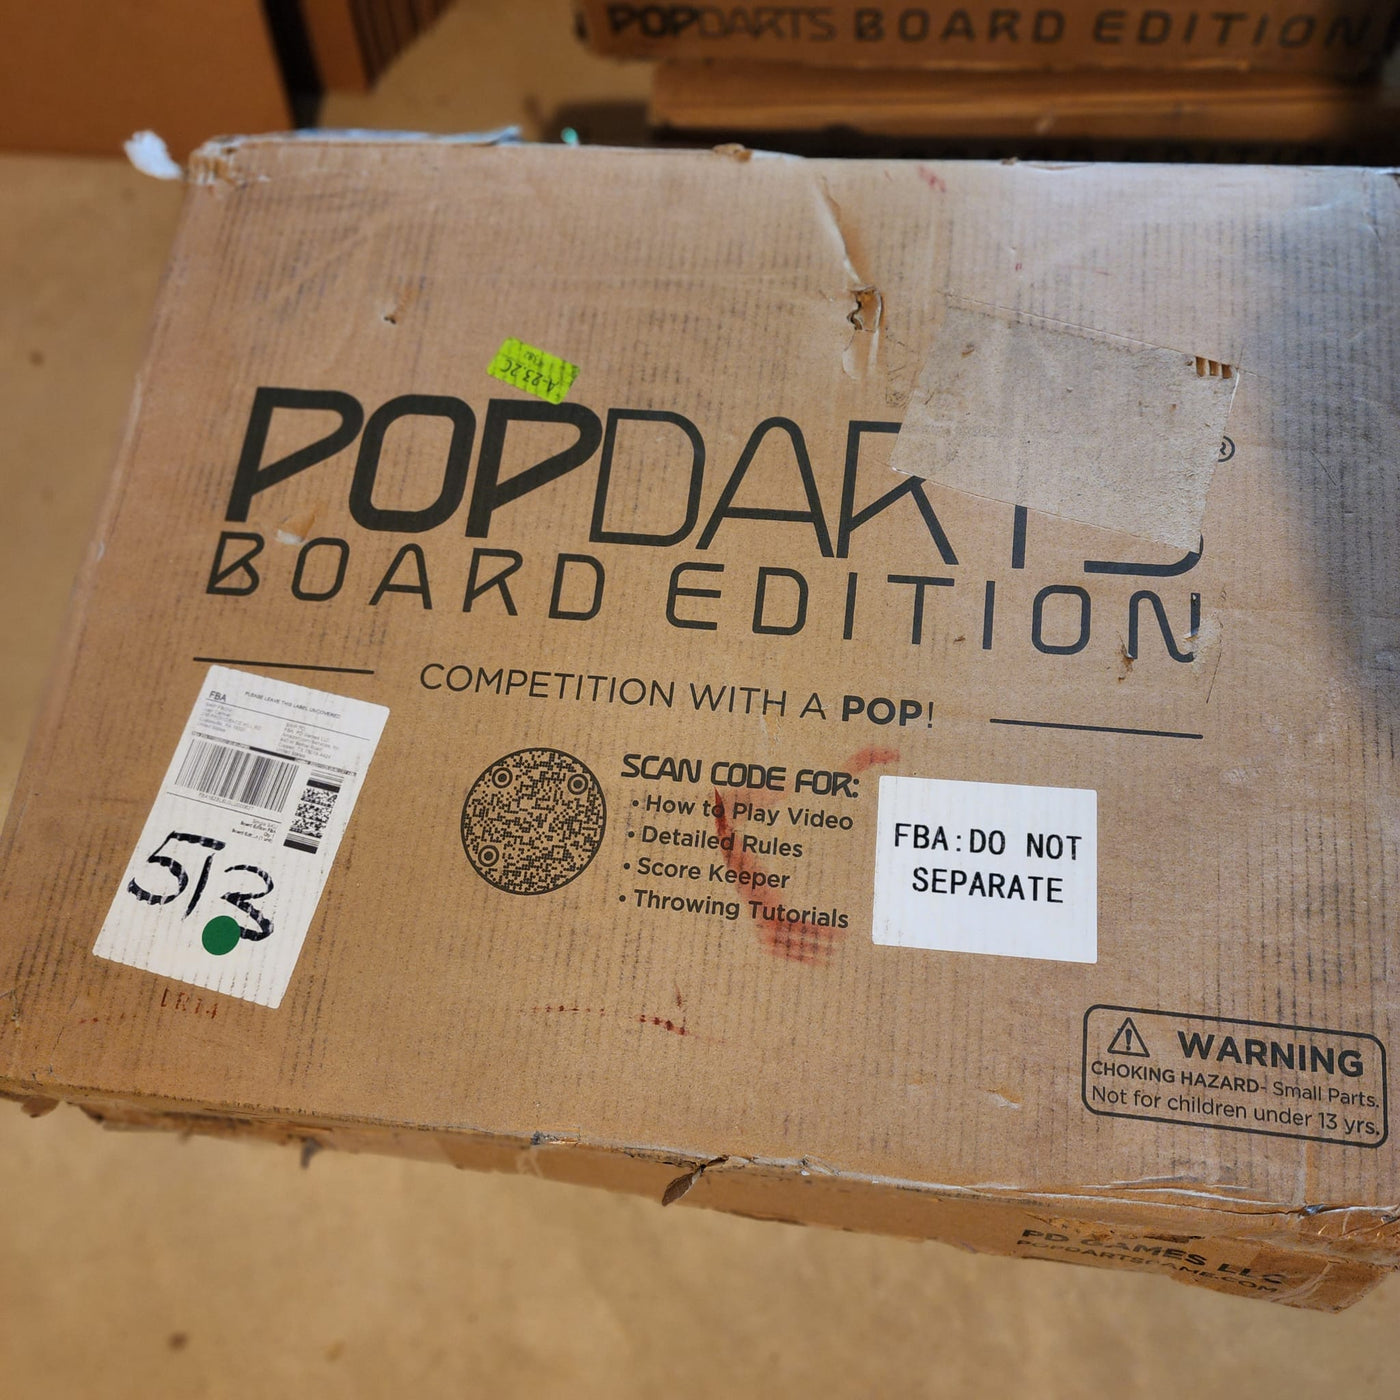 Popdarts Board Edition (1 Board - Popdarts sold separately)